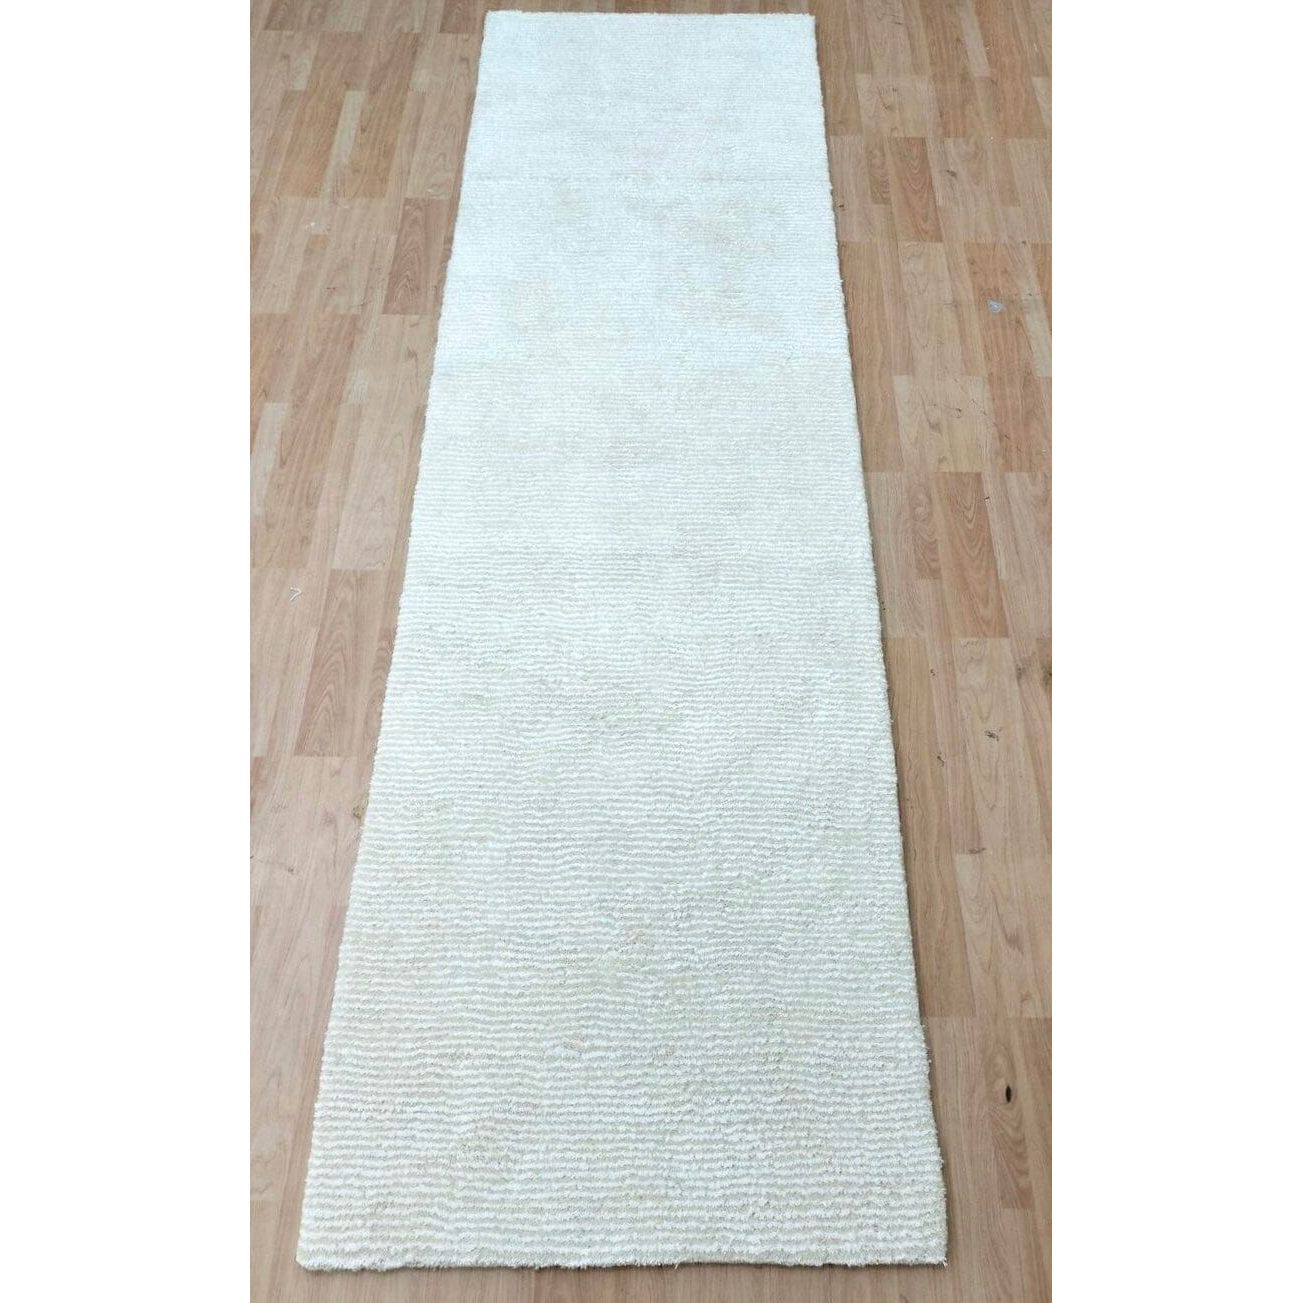 Seersucker Shag Ivory Handtufted handtufted wool Organic Weave Shop 3' x 10' RUNNER Ivory 